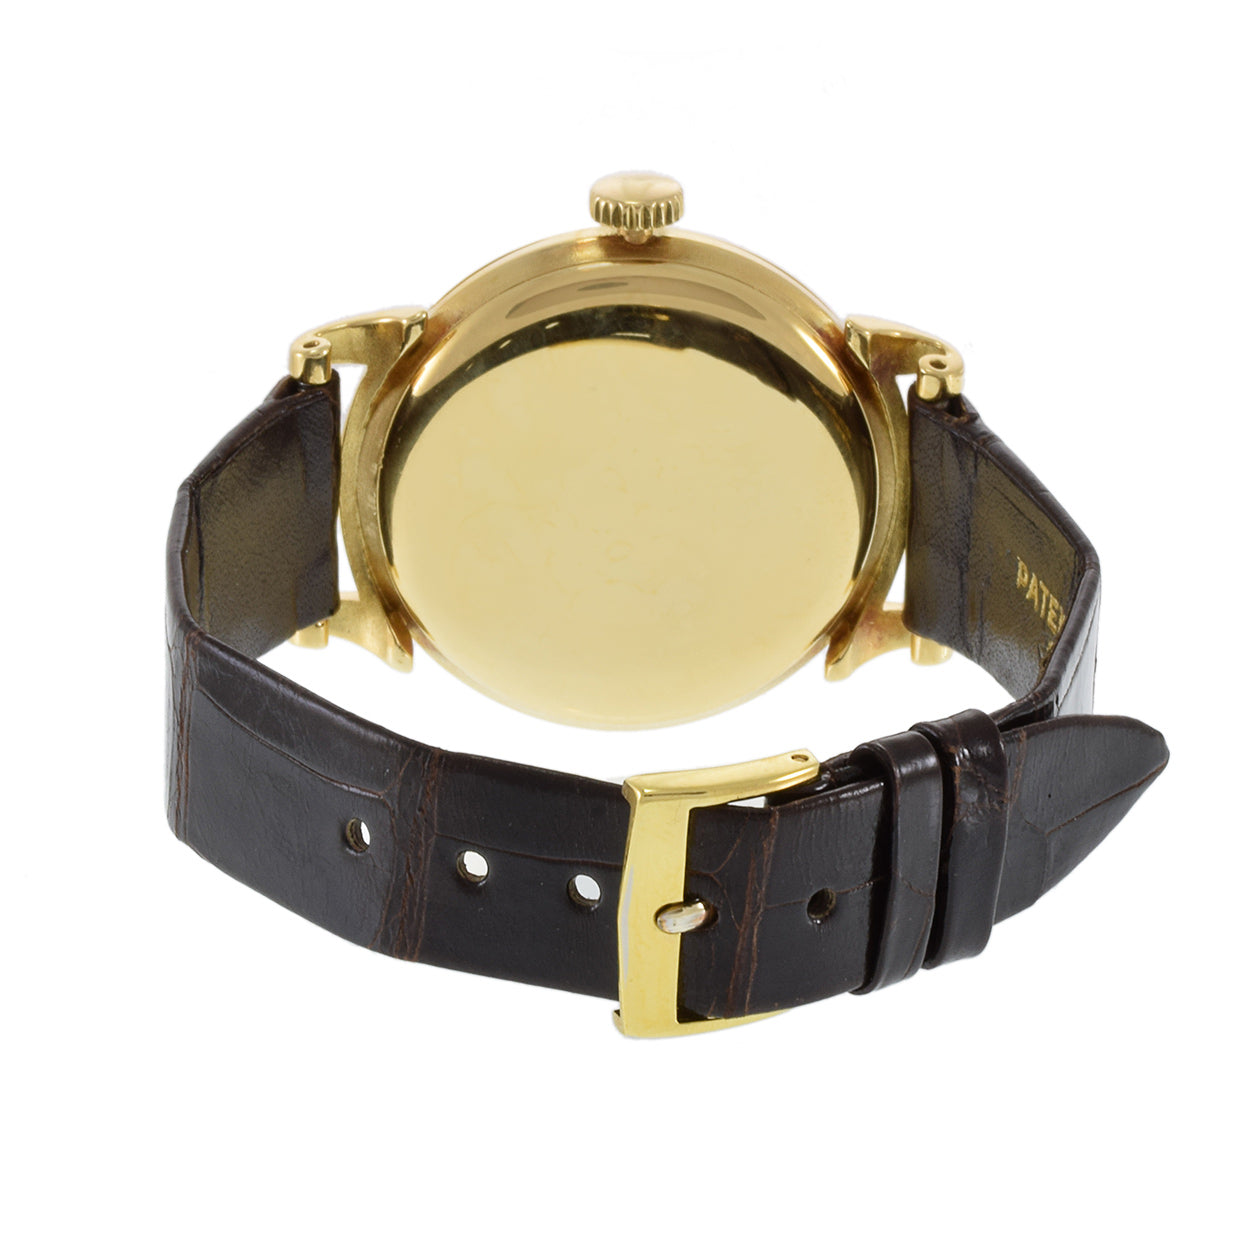 Vintage 1953 Patek Philippe Calatrava 1491 18KT Yellow Gold watch